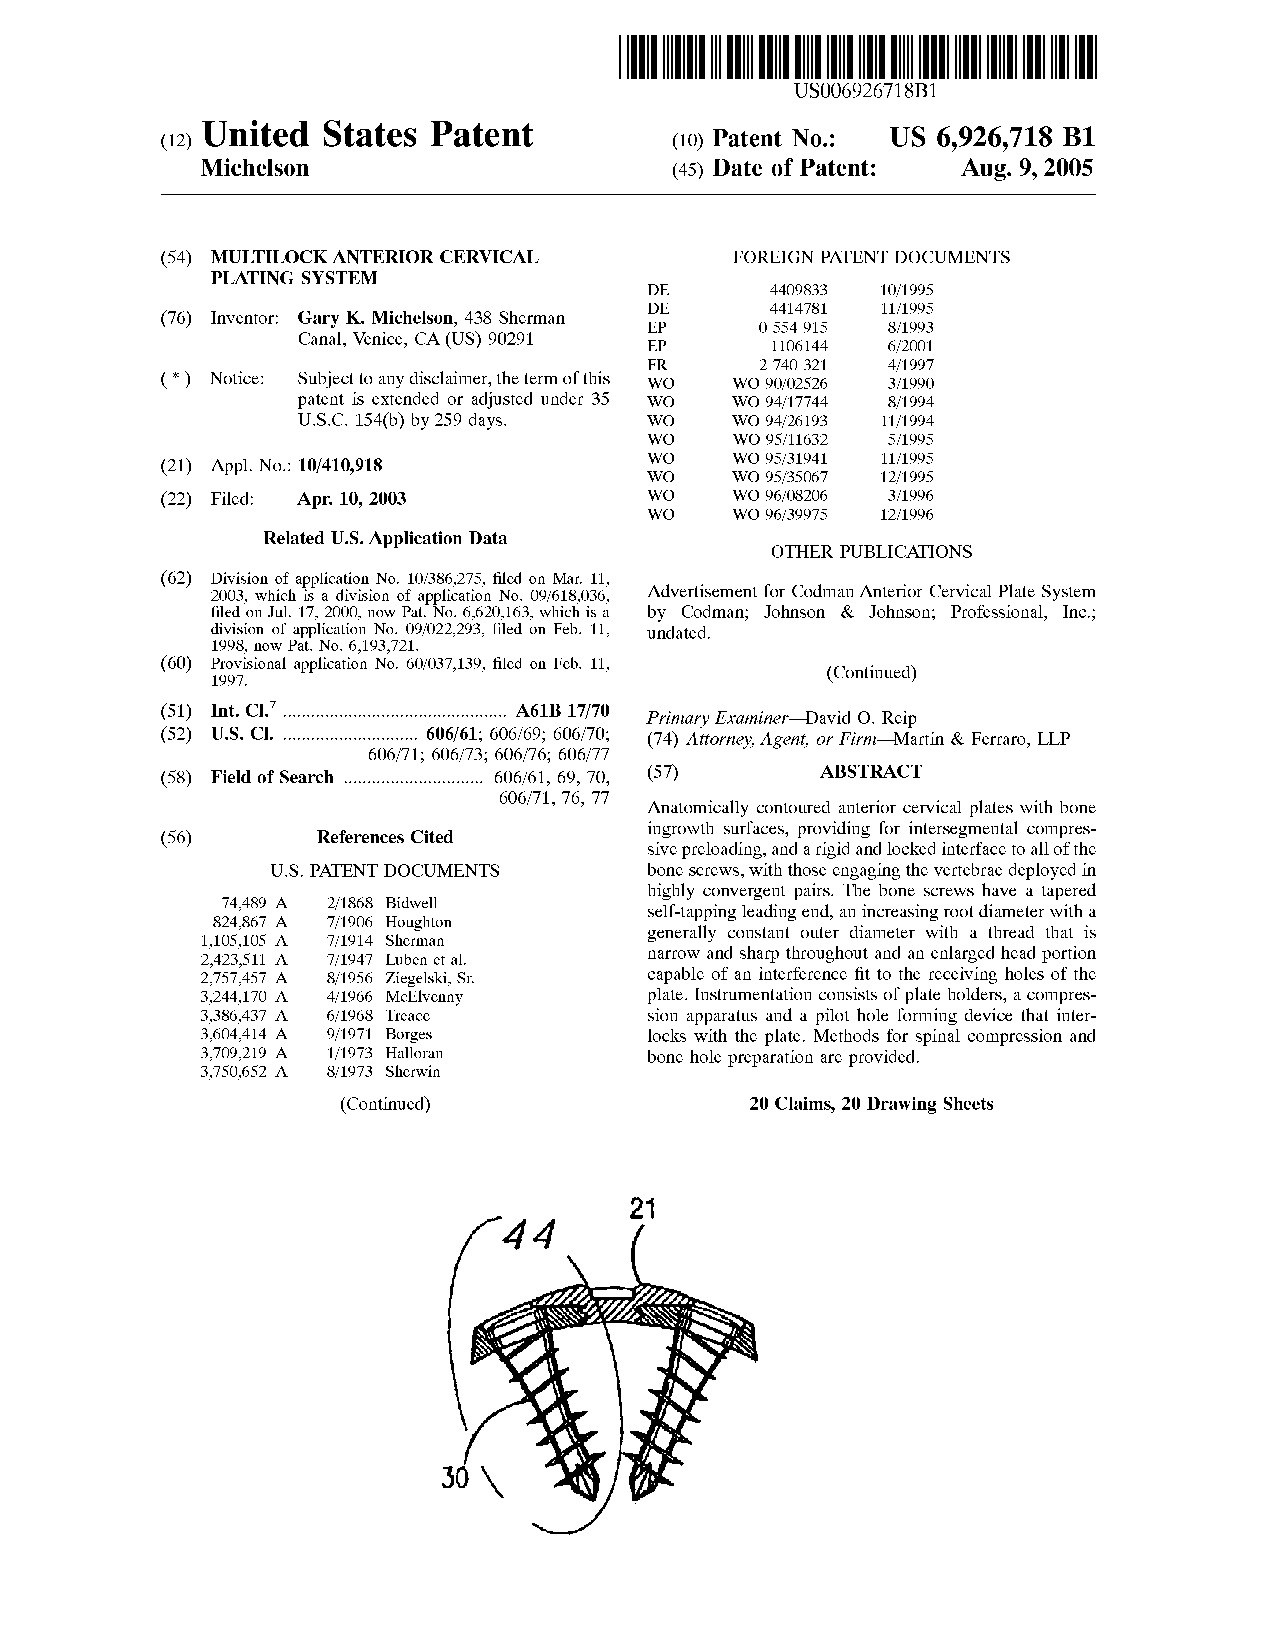 Multilock anterior cervical plating system - Patent 6,926,718